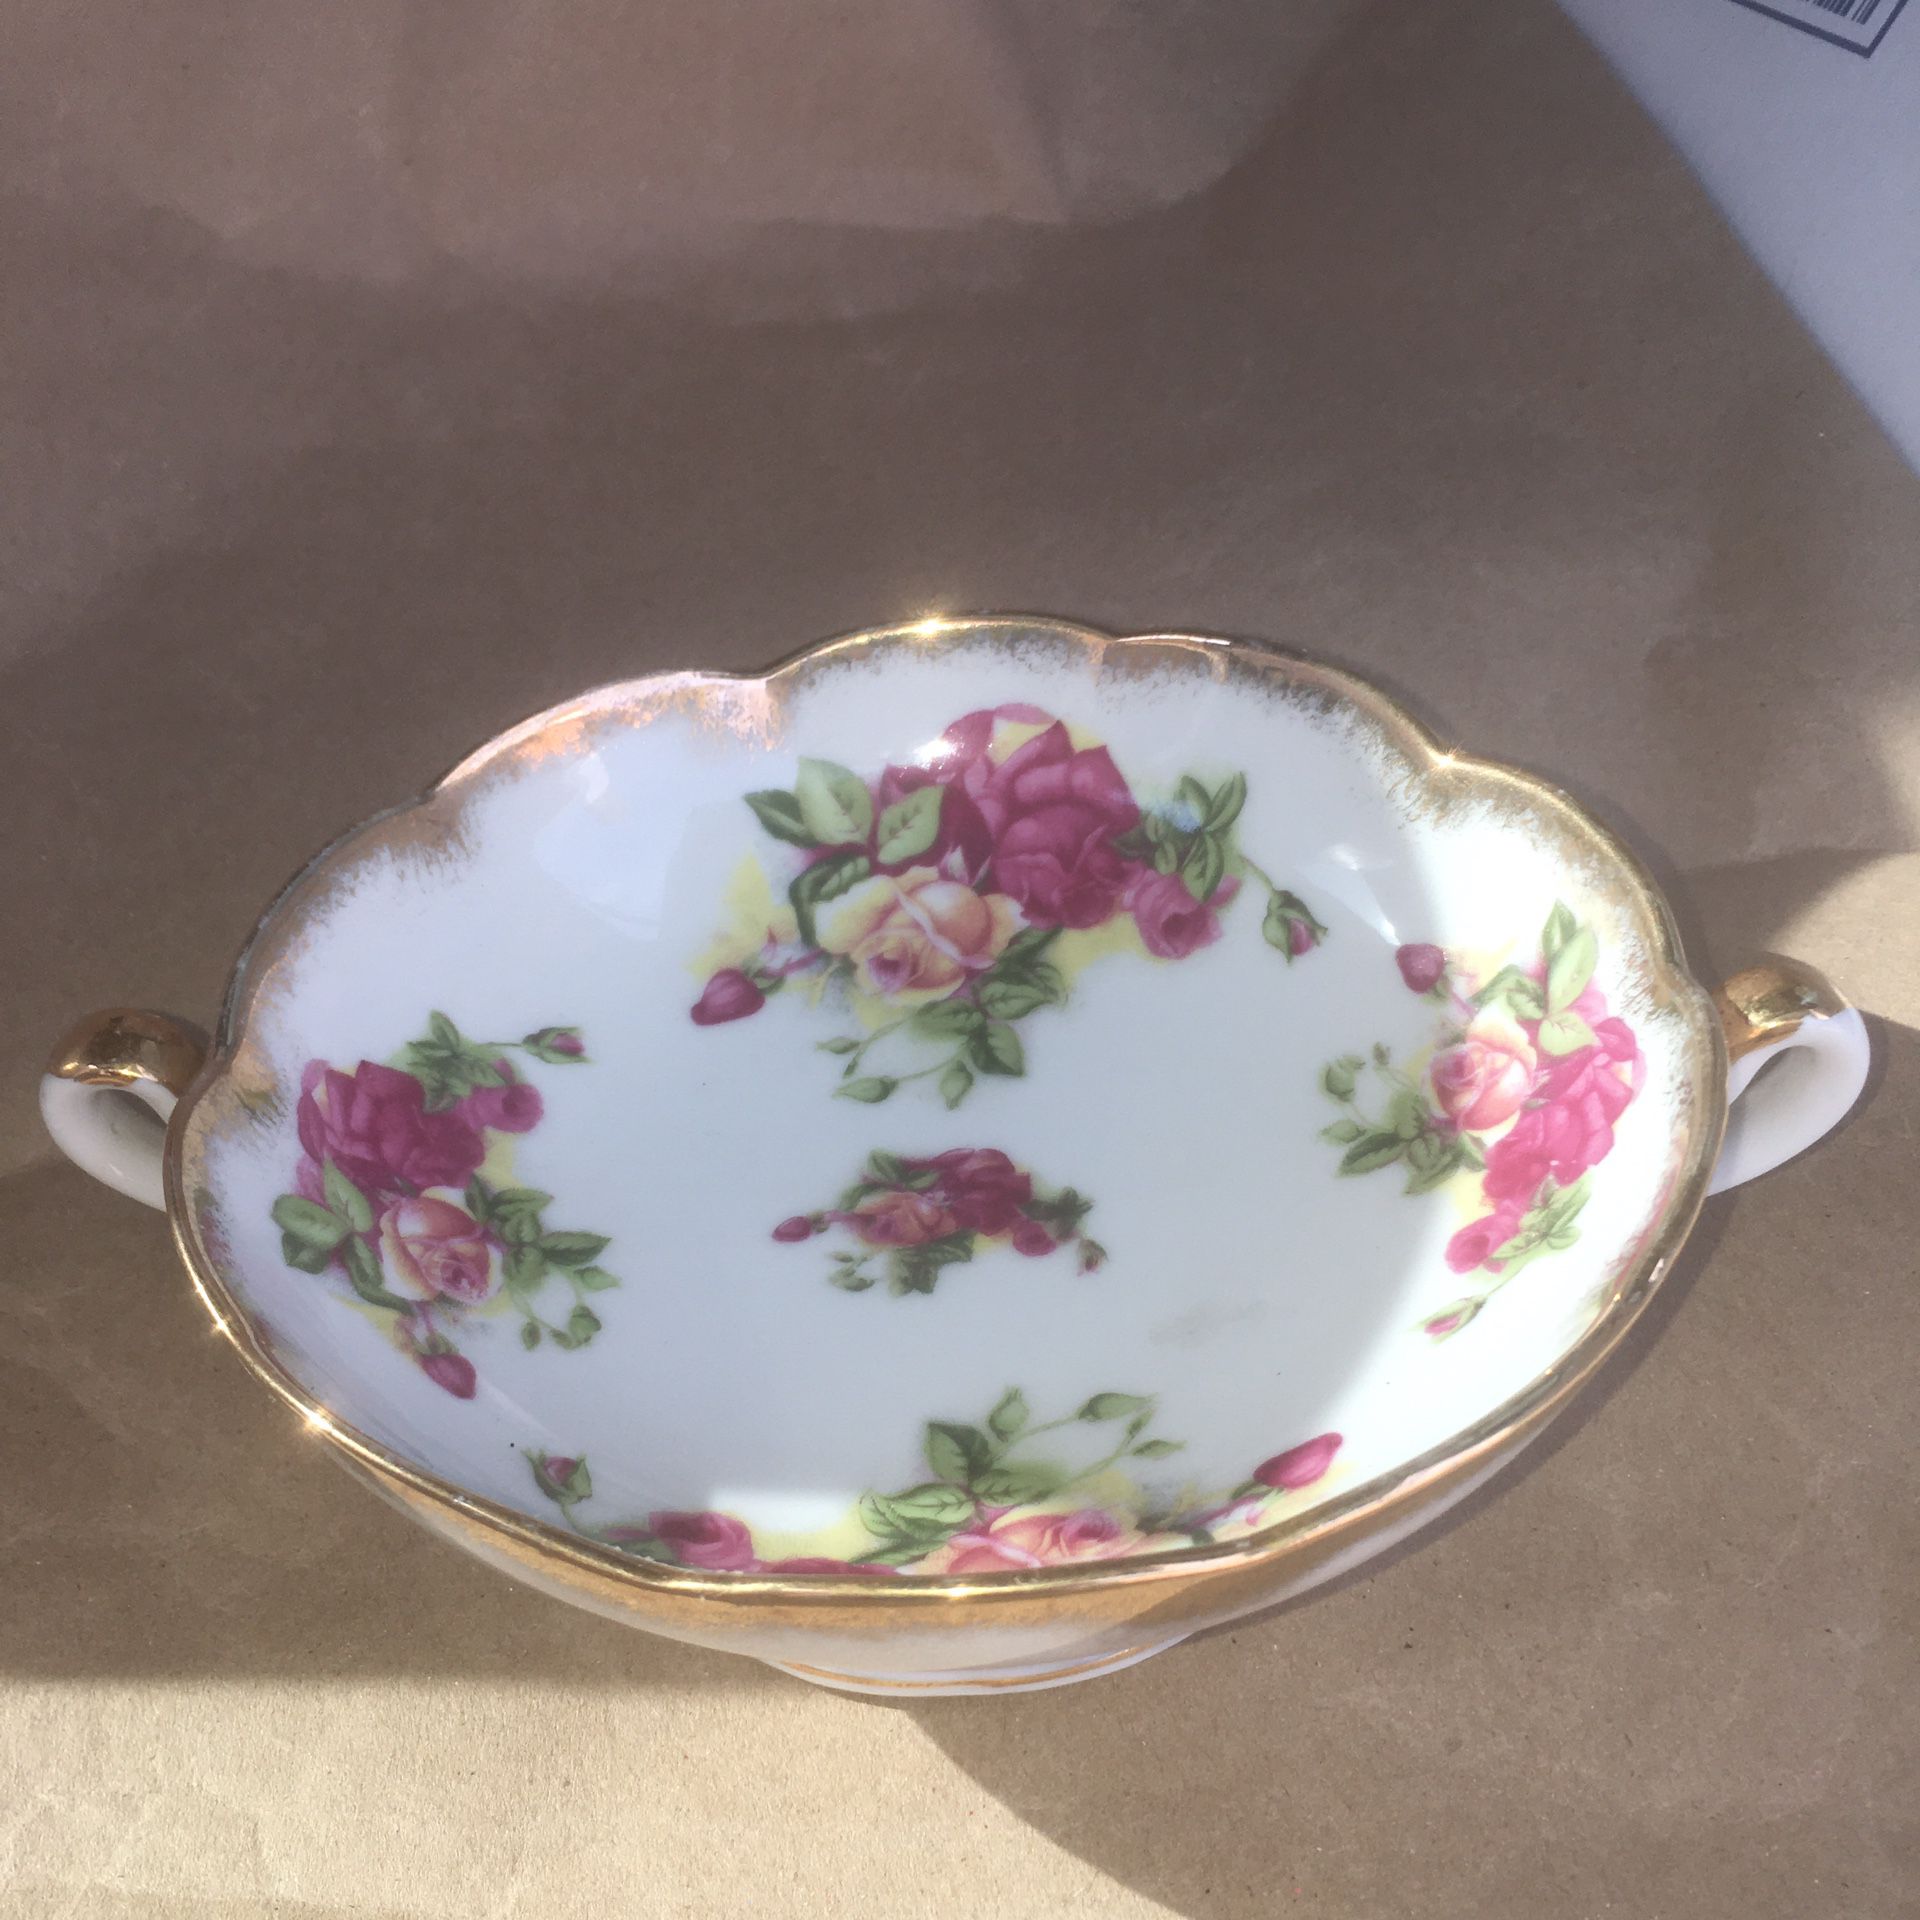 Floral gold dish antique china glassware vintage white floral